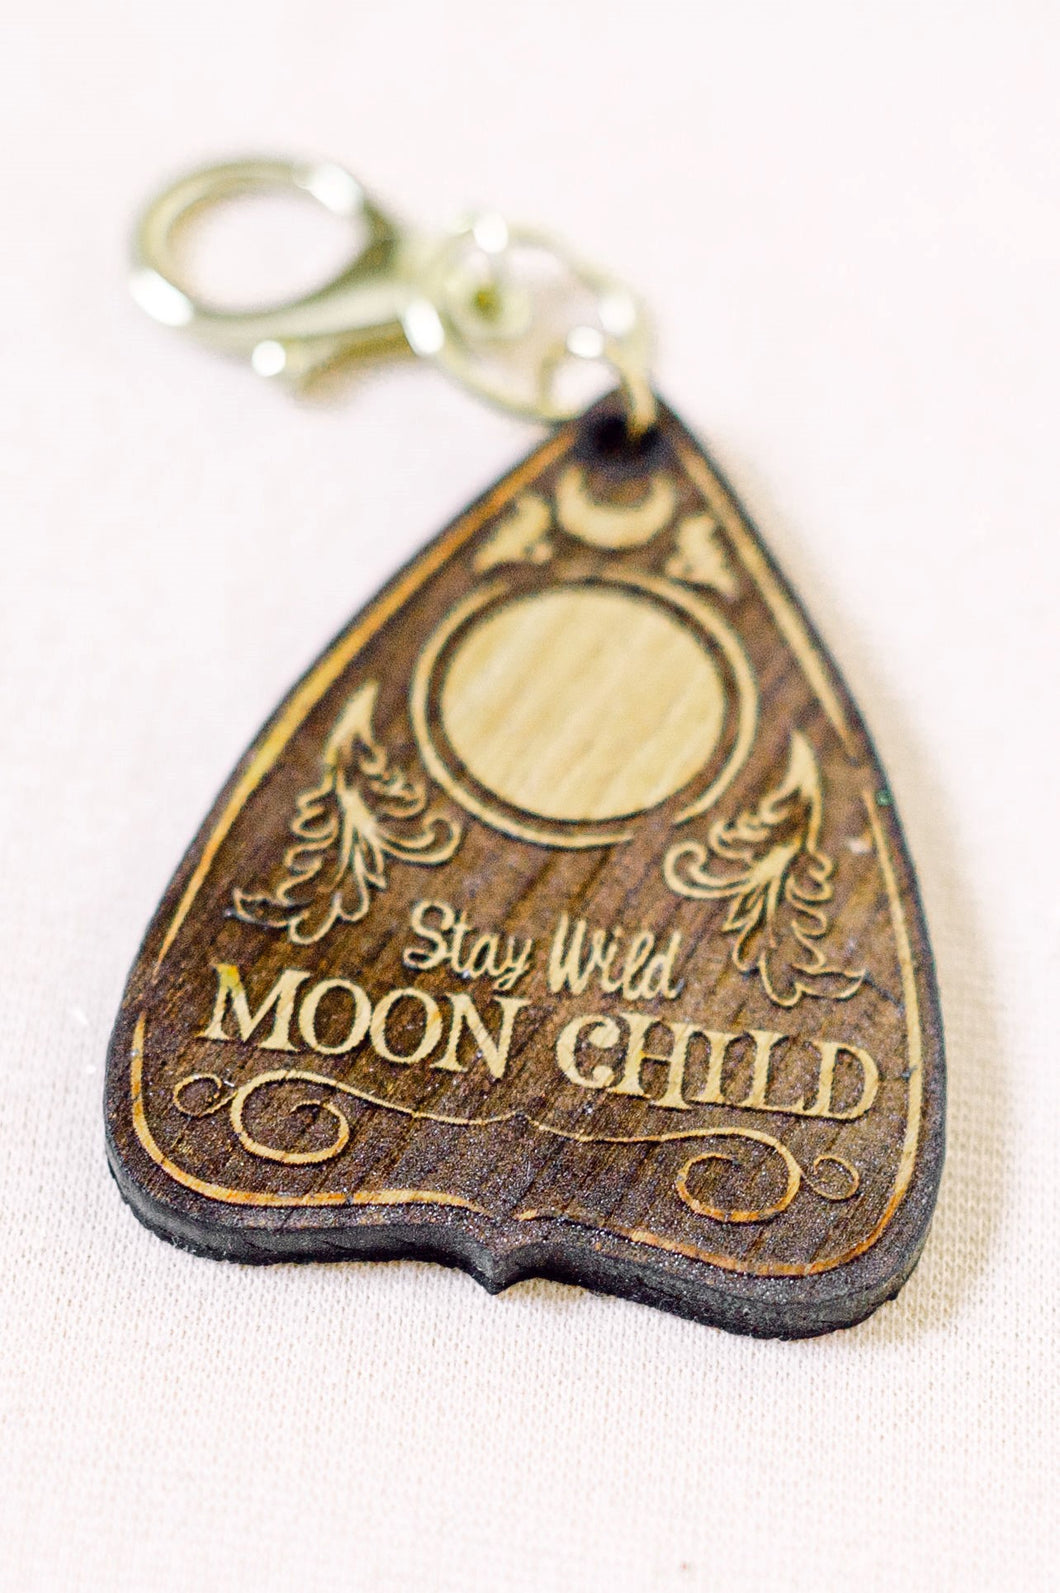 Stay Wild Moon Child Key Chain